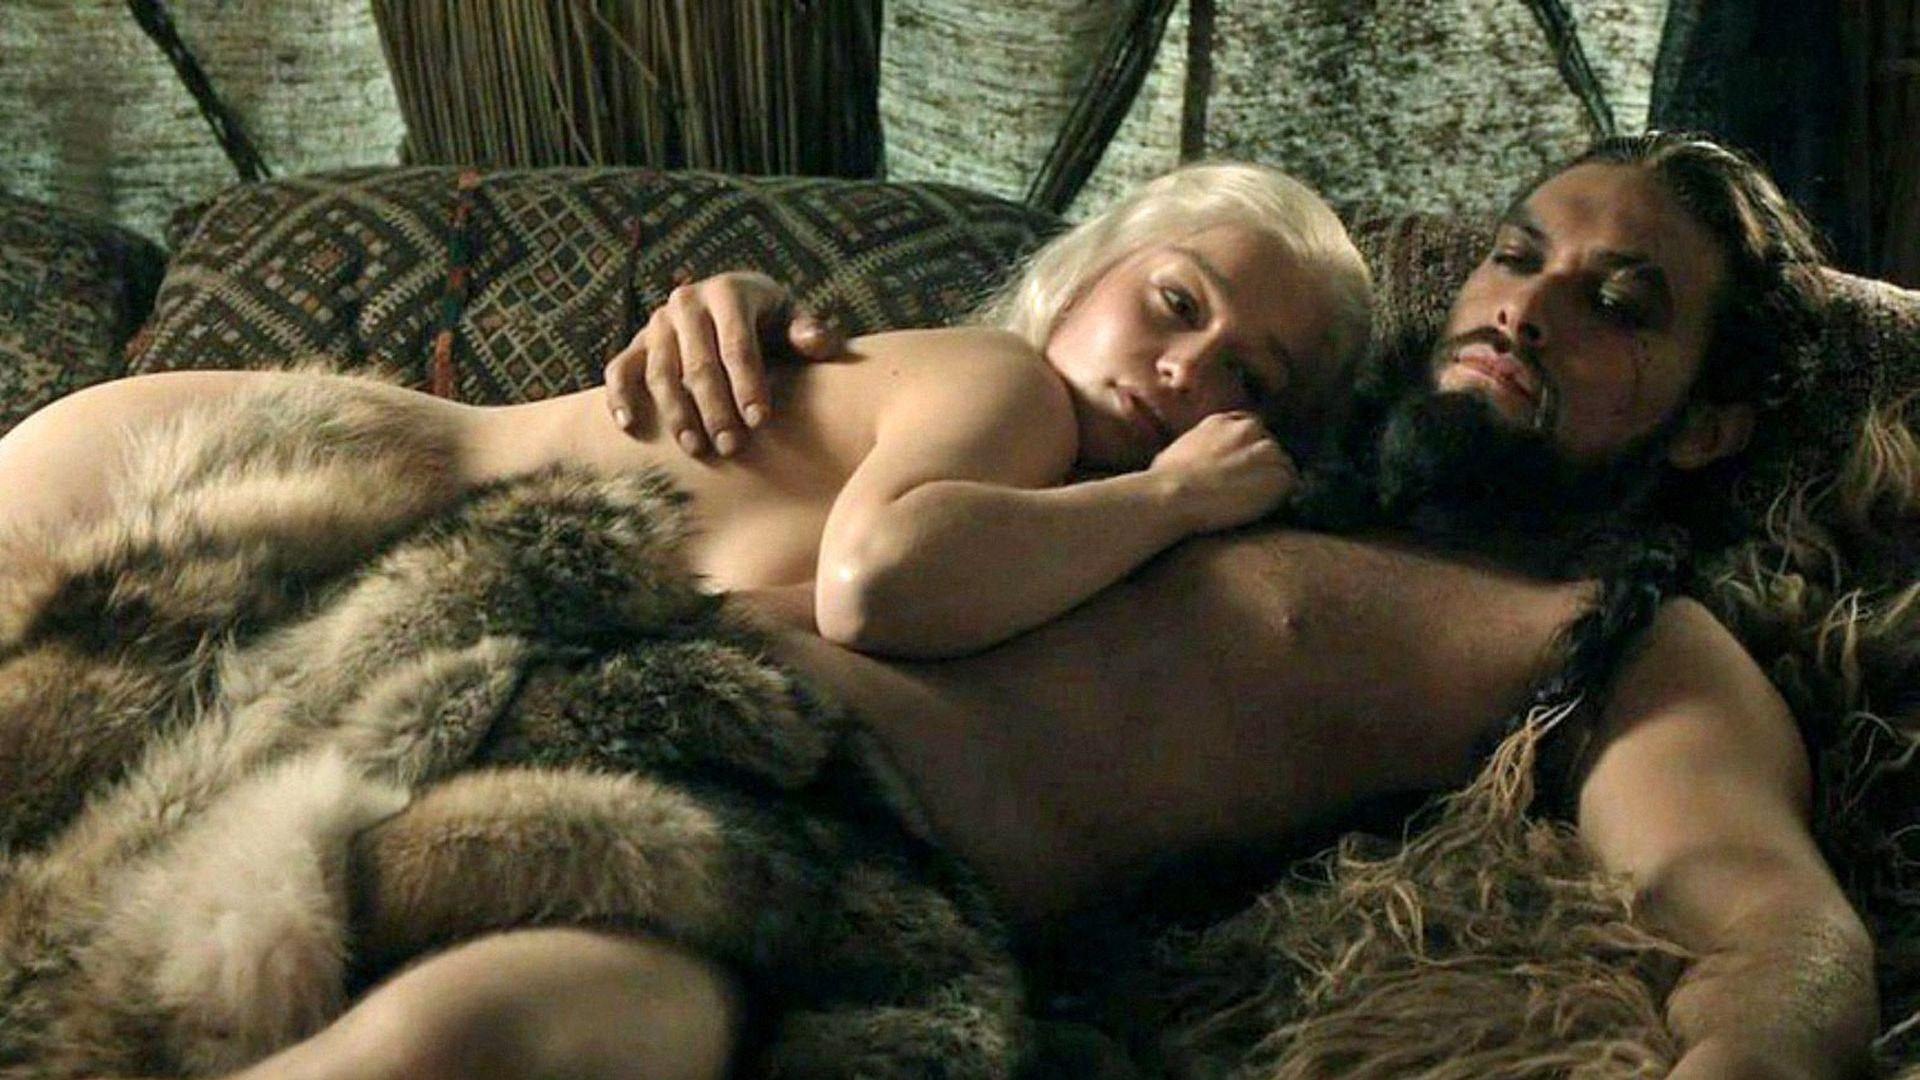 christopher sabol recommends Daenerys Targaryen And Khal Drogo Sex